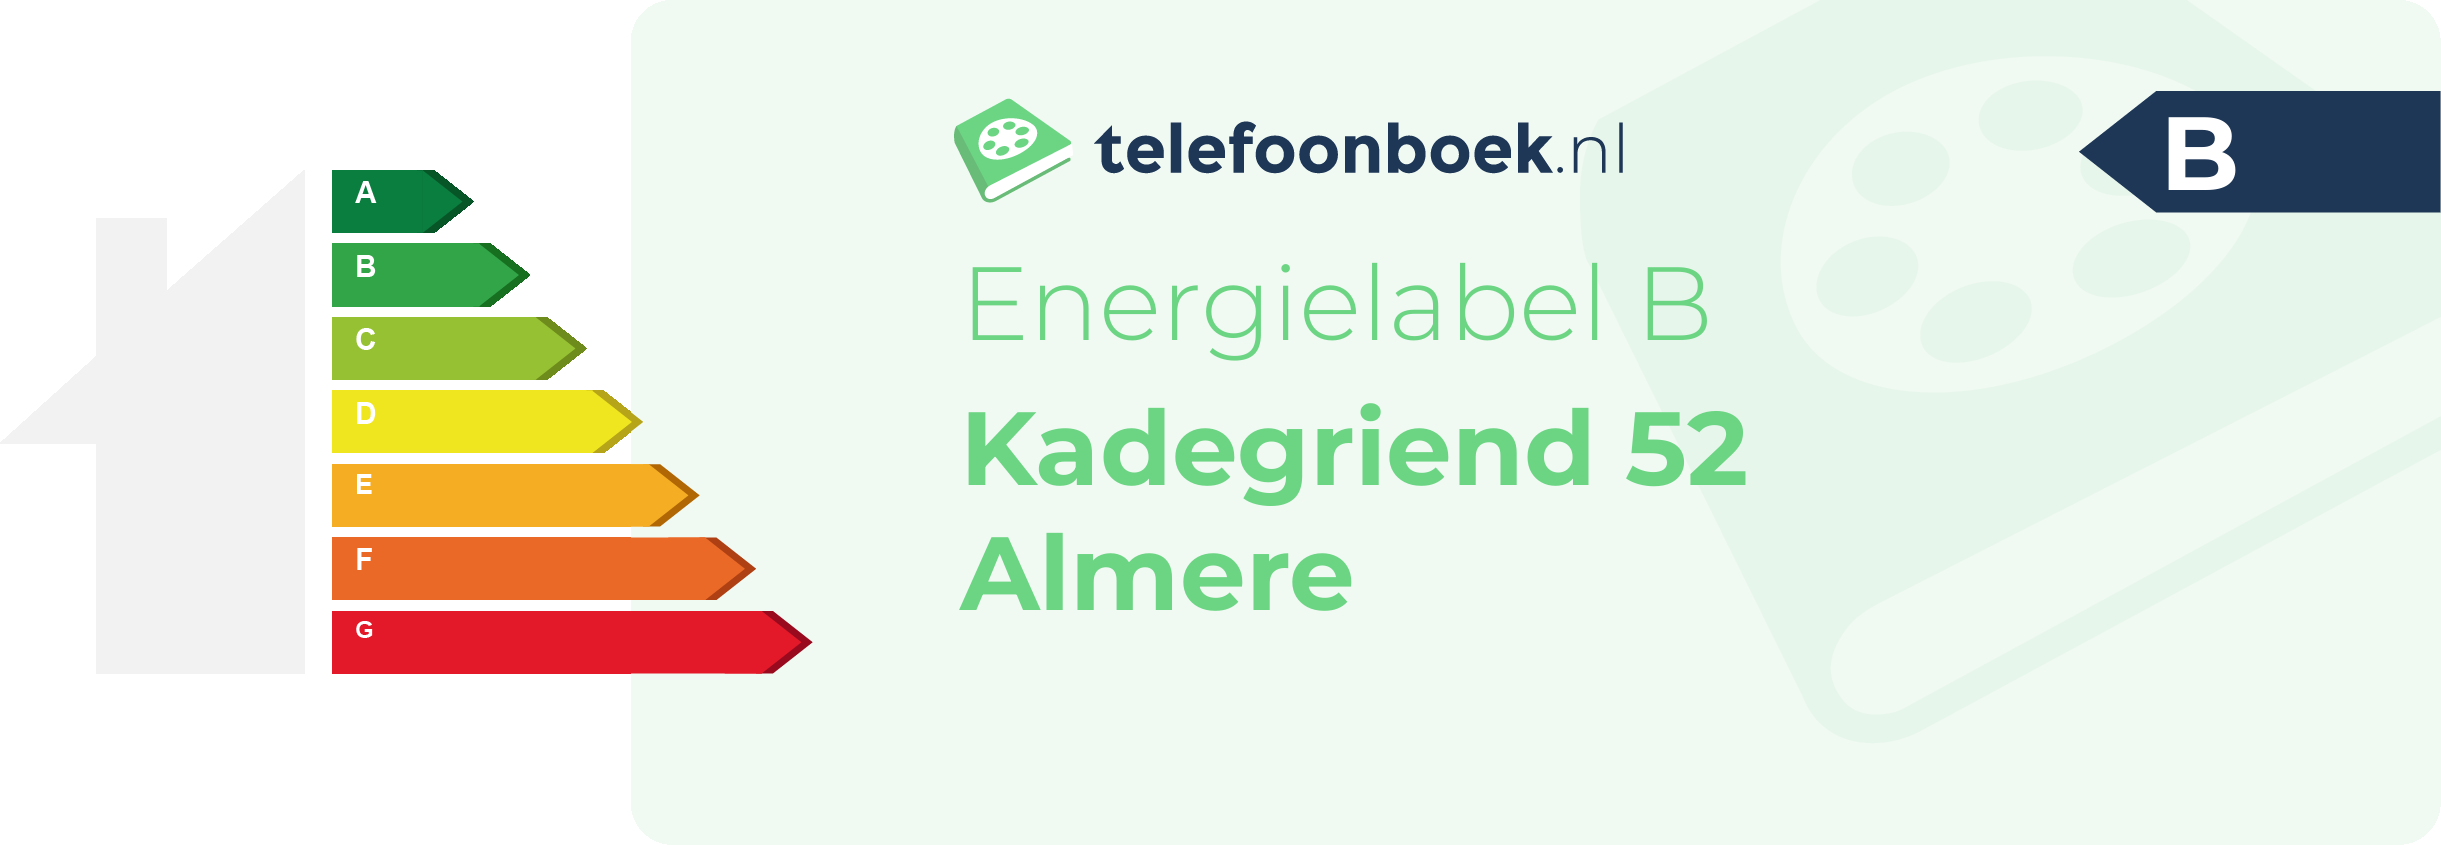 Energielabel Kadegriend 52 Almere